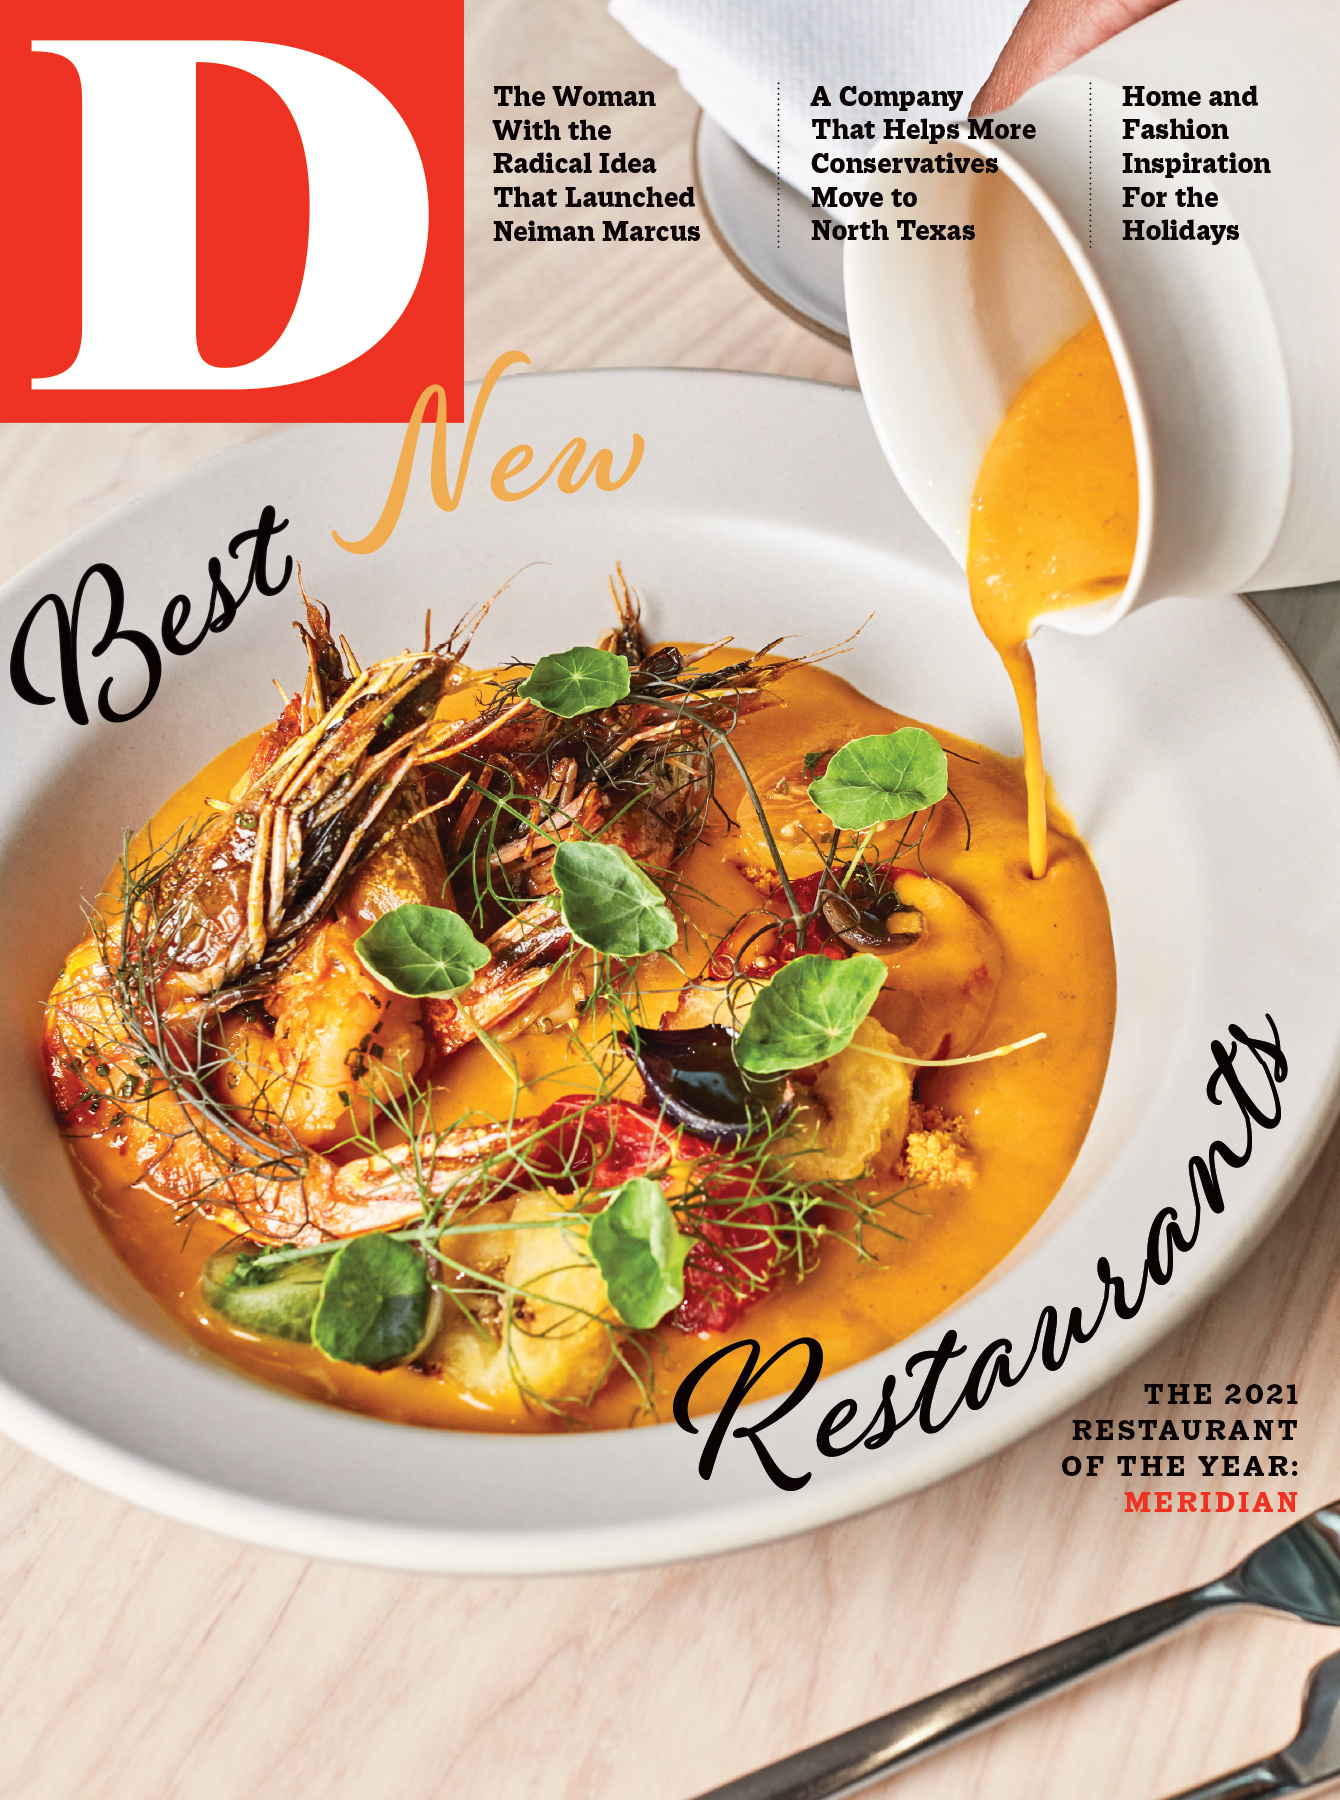 D Magazine December 2021 cover